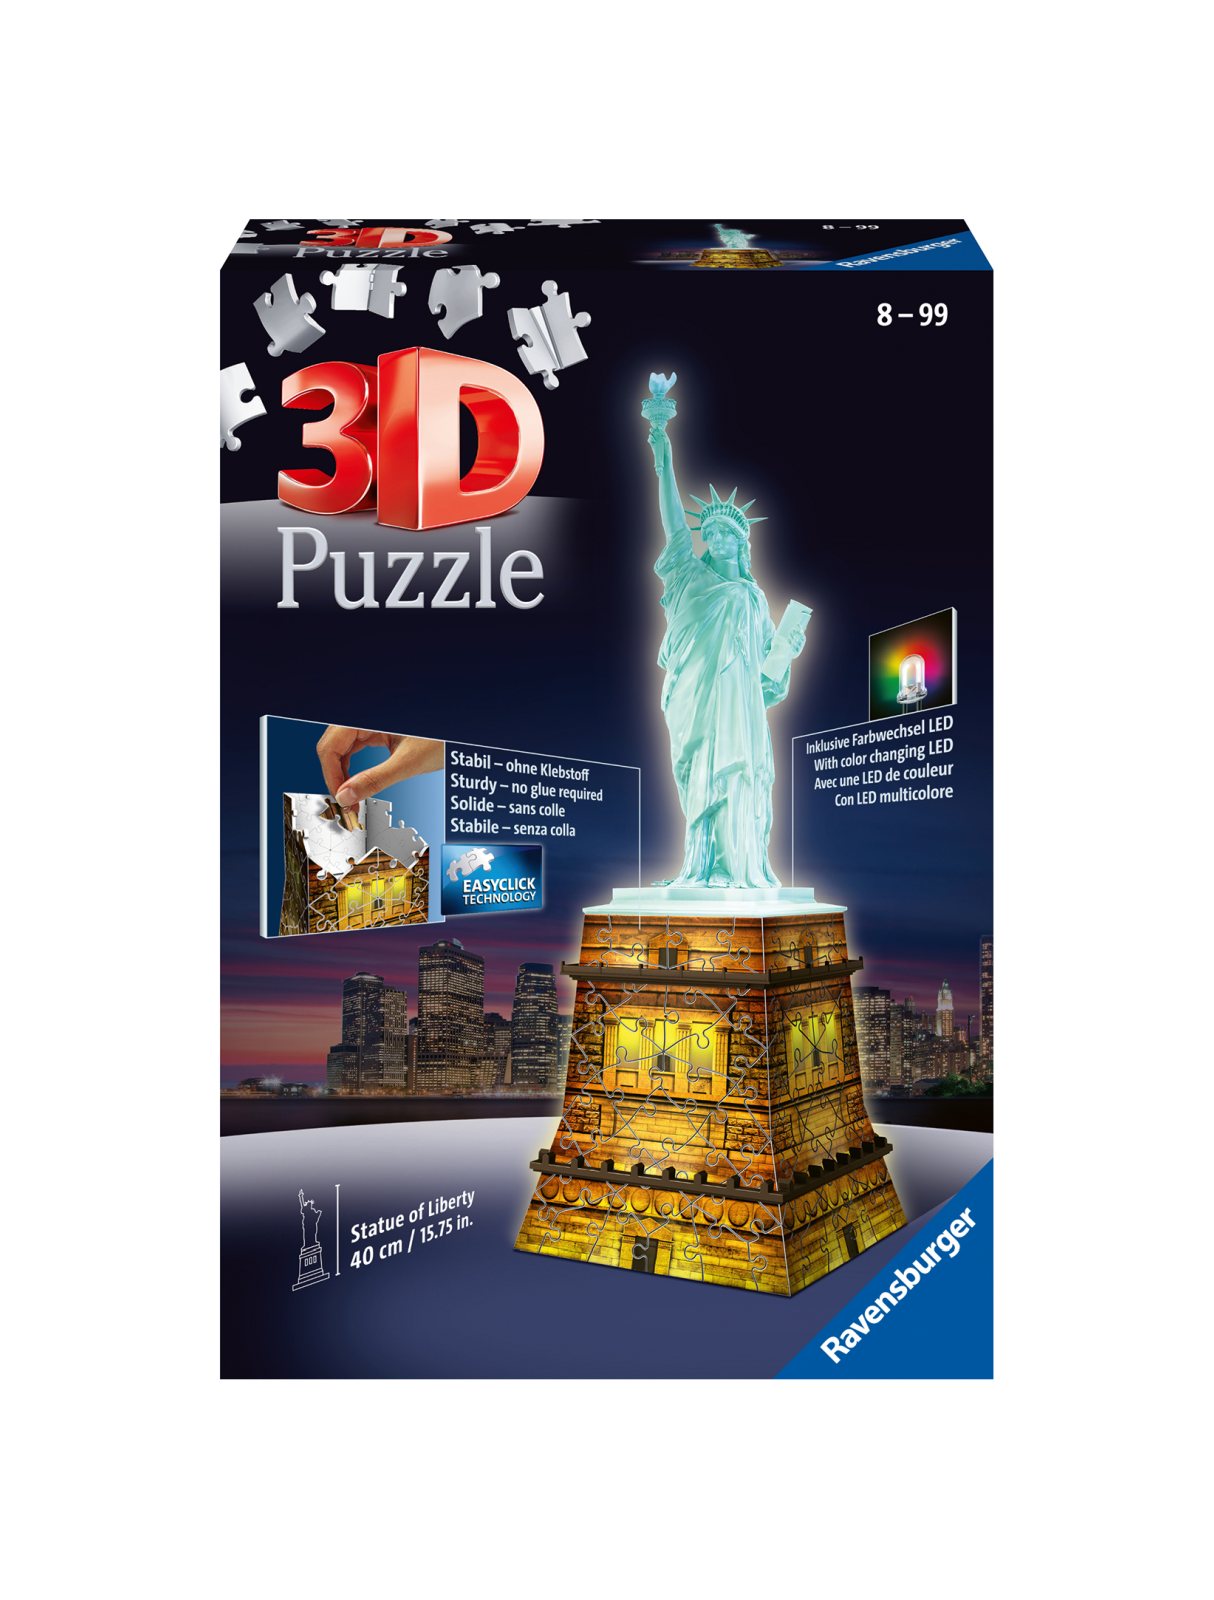 Ravensburger - 3d puzzle statua della liberta' night edition, londra, 216 pezzi, 10+ anni - RAVENSBURGER 3D PUZZLE